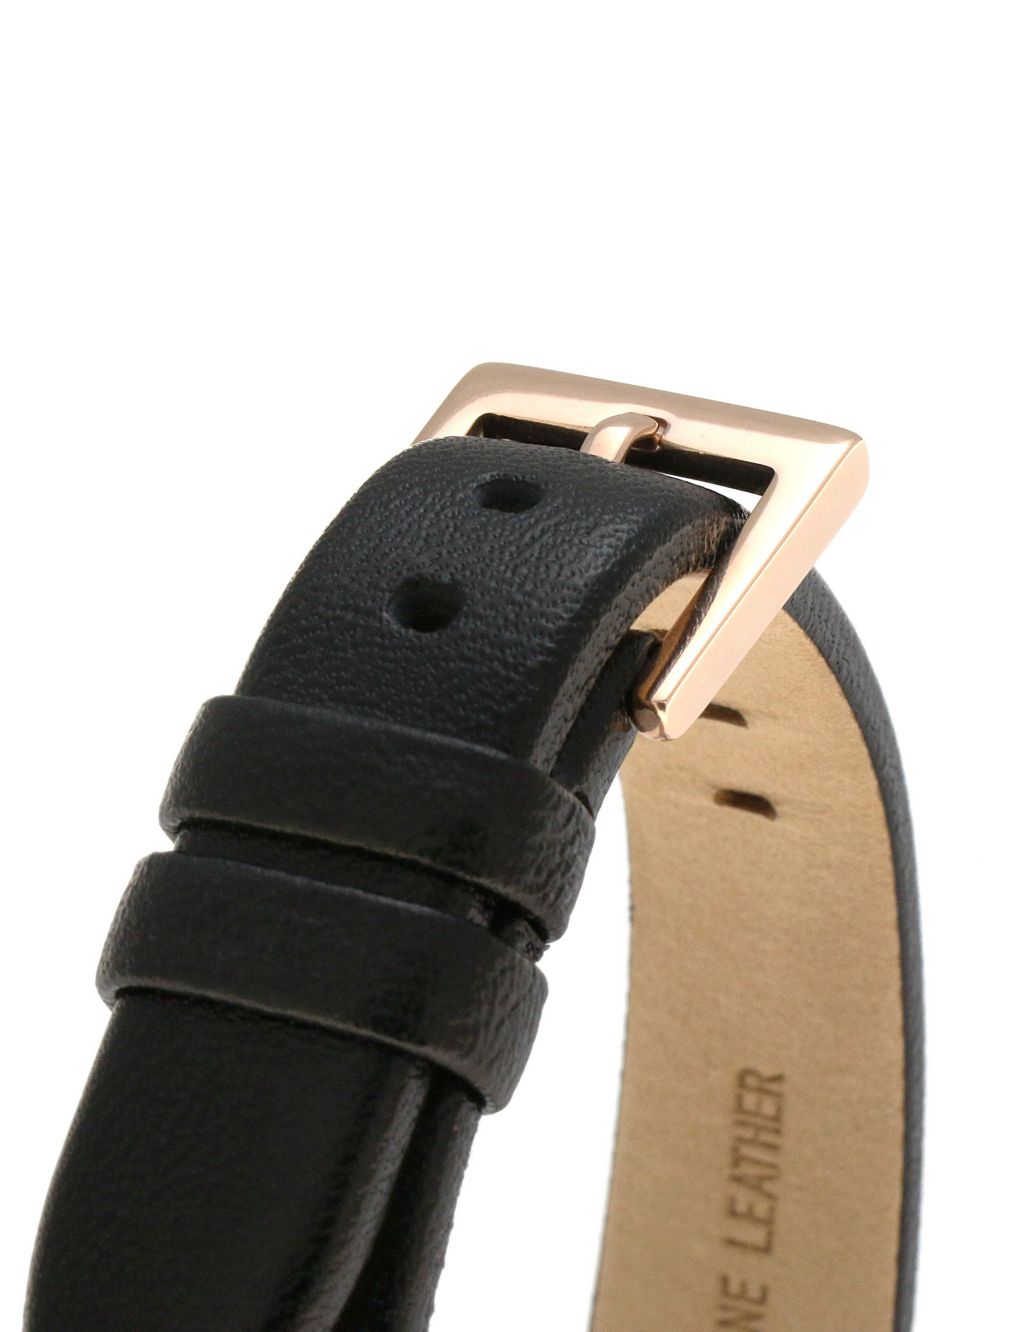 DKNY Modernist Black Leather Analogue Quartz Watch image 4